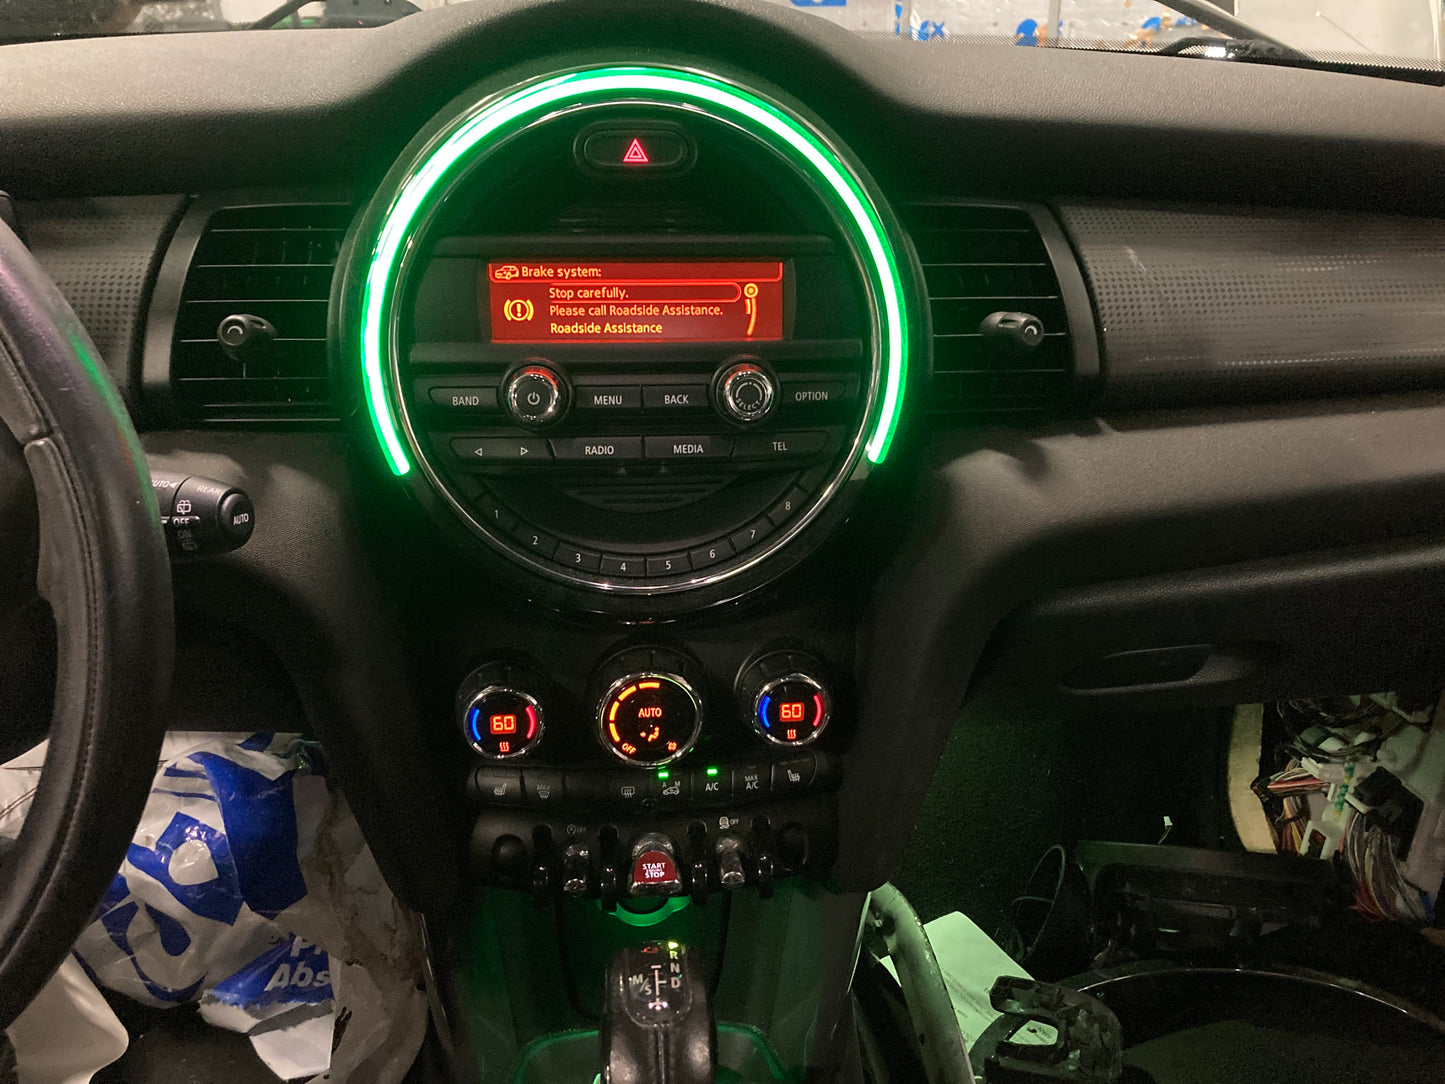 2016 MINI Cooper, New Parts Car (March 2023) Stk #369